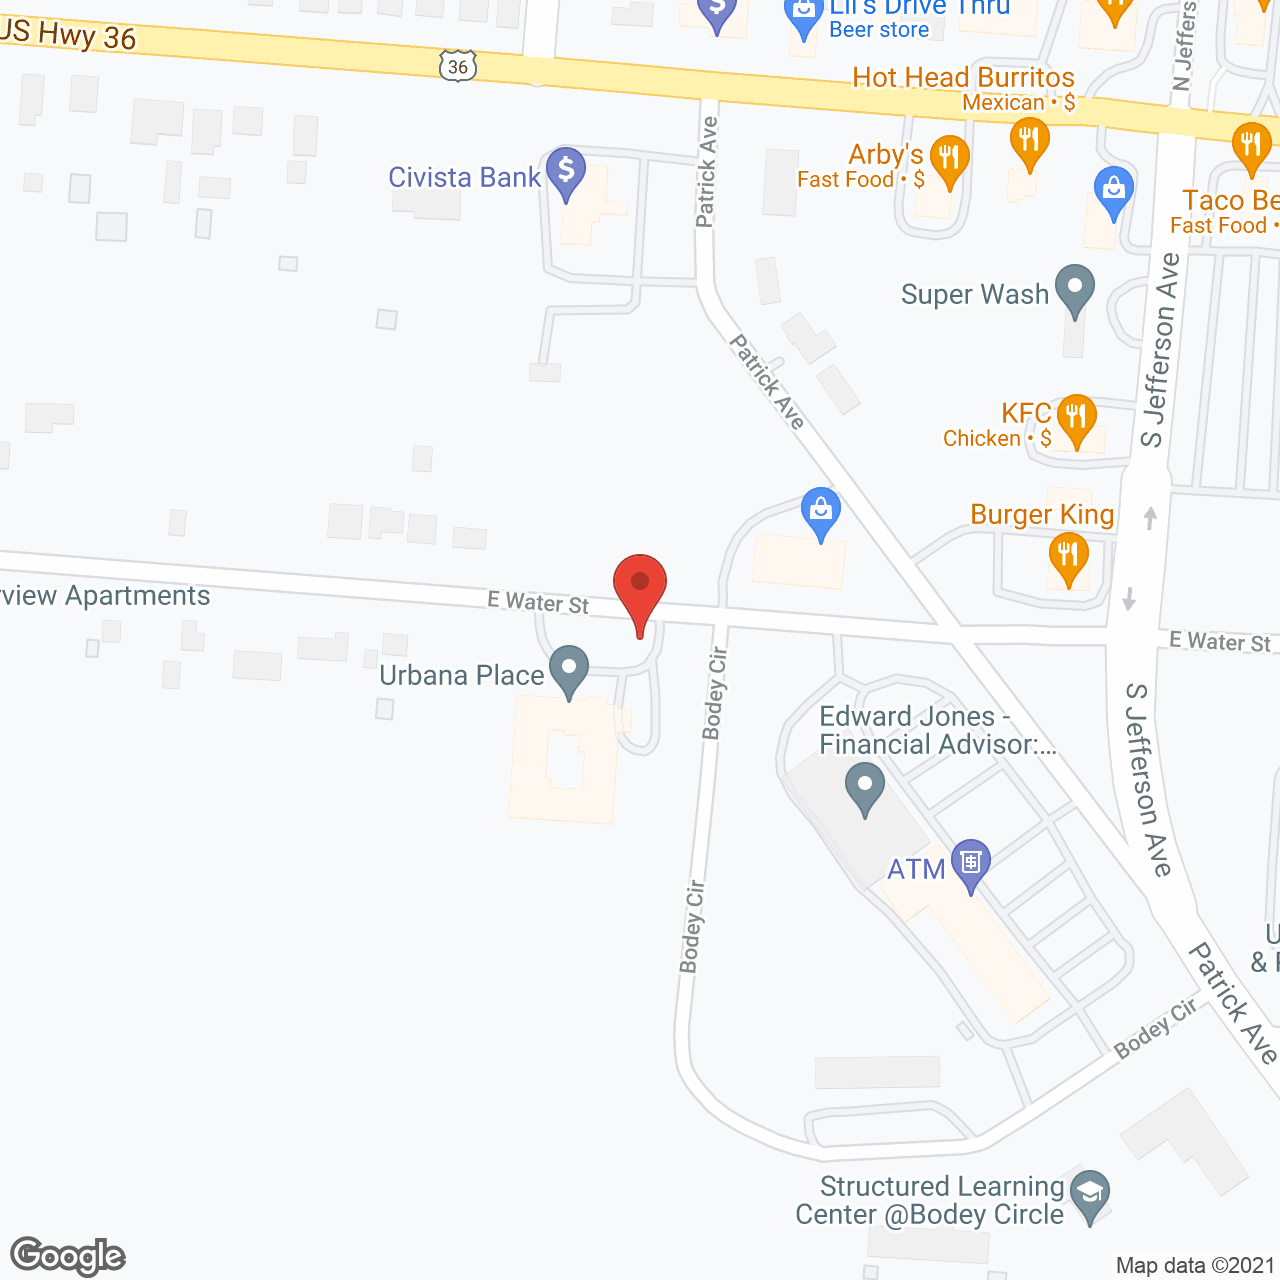 Urbana Place in google map